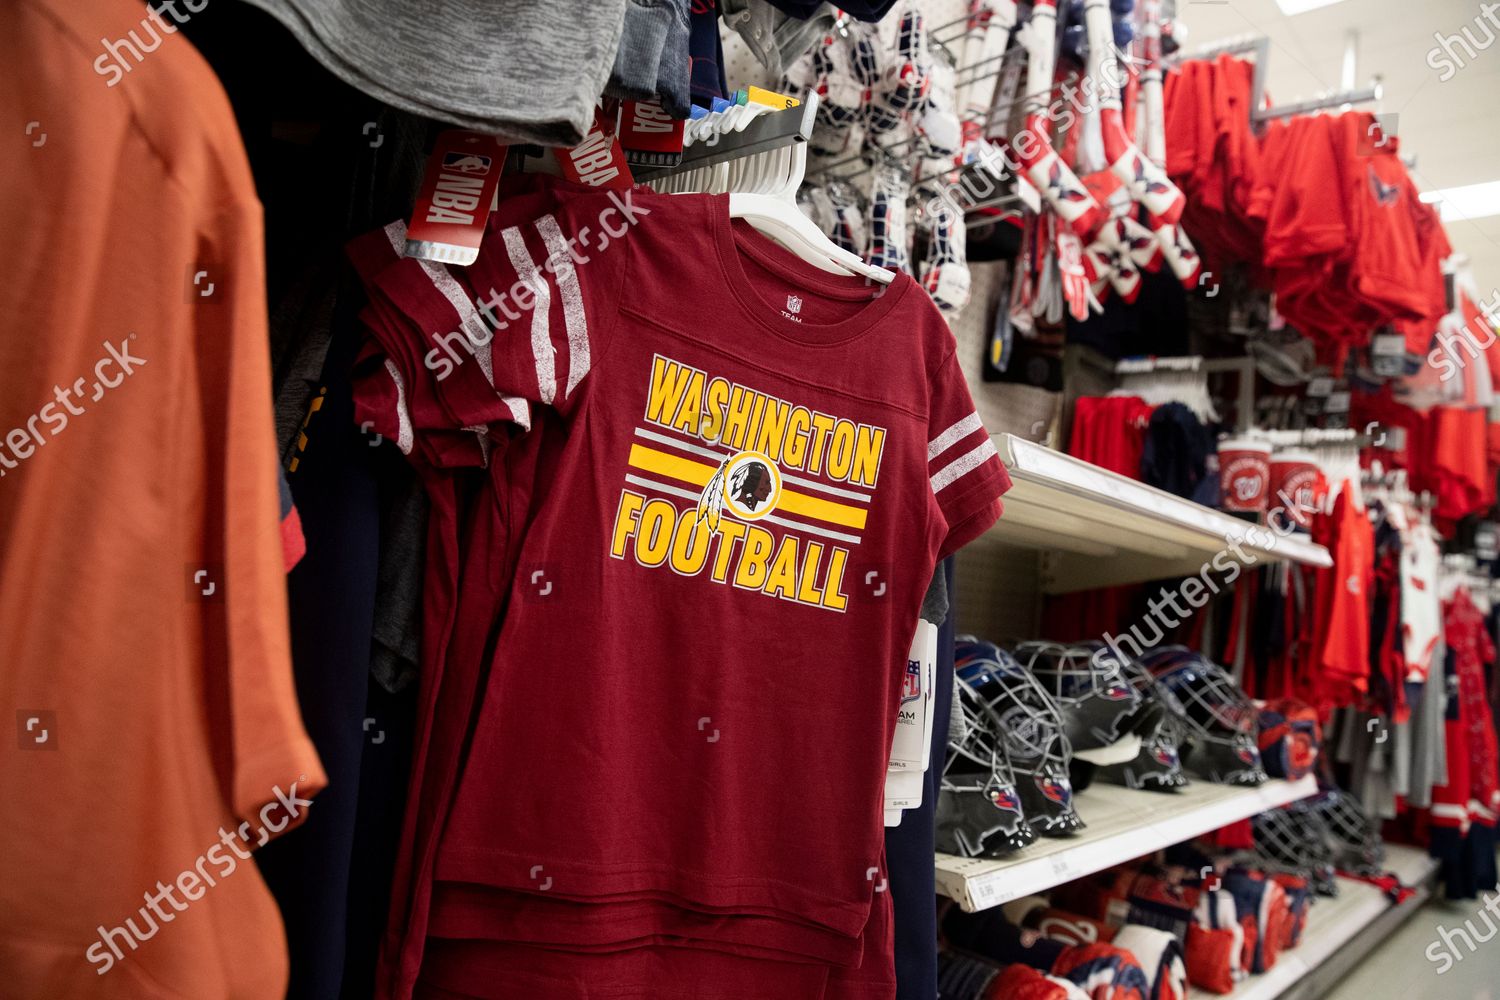 Washington Redskins Shirt Sale Store Alexandria Editorial Stock Photo -  Stock Image